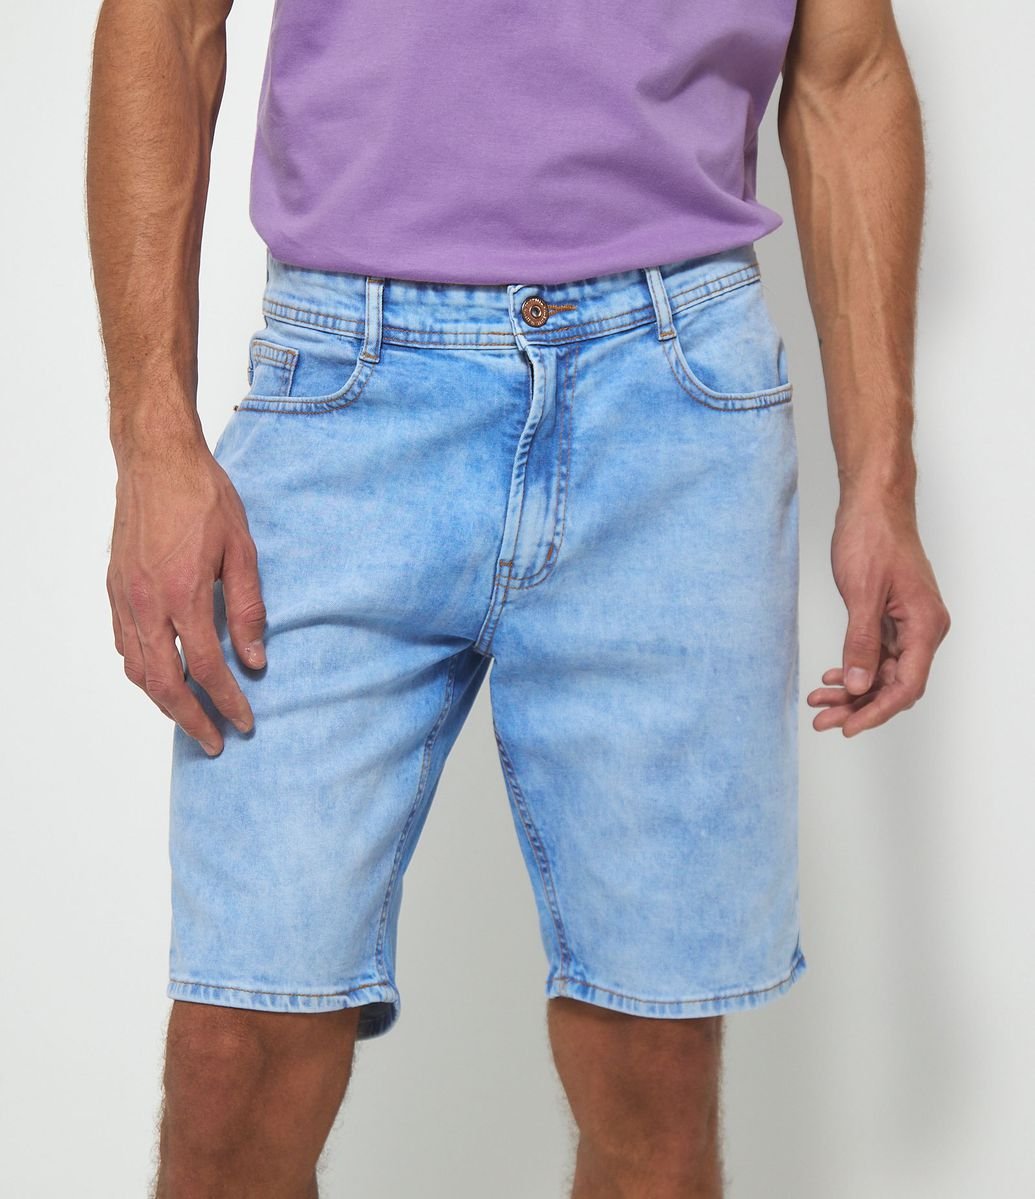 bermuda jeans masculina lojas renner